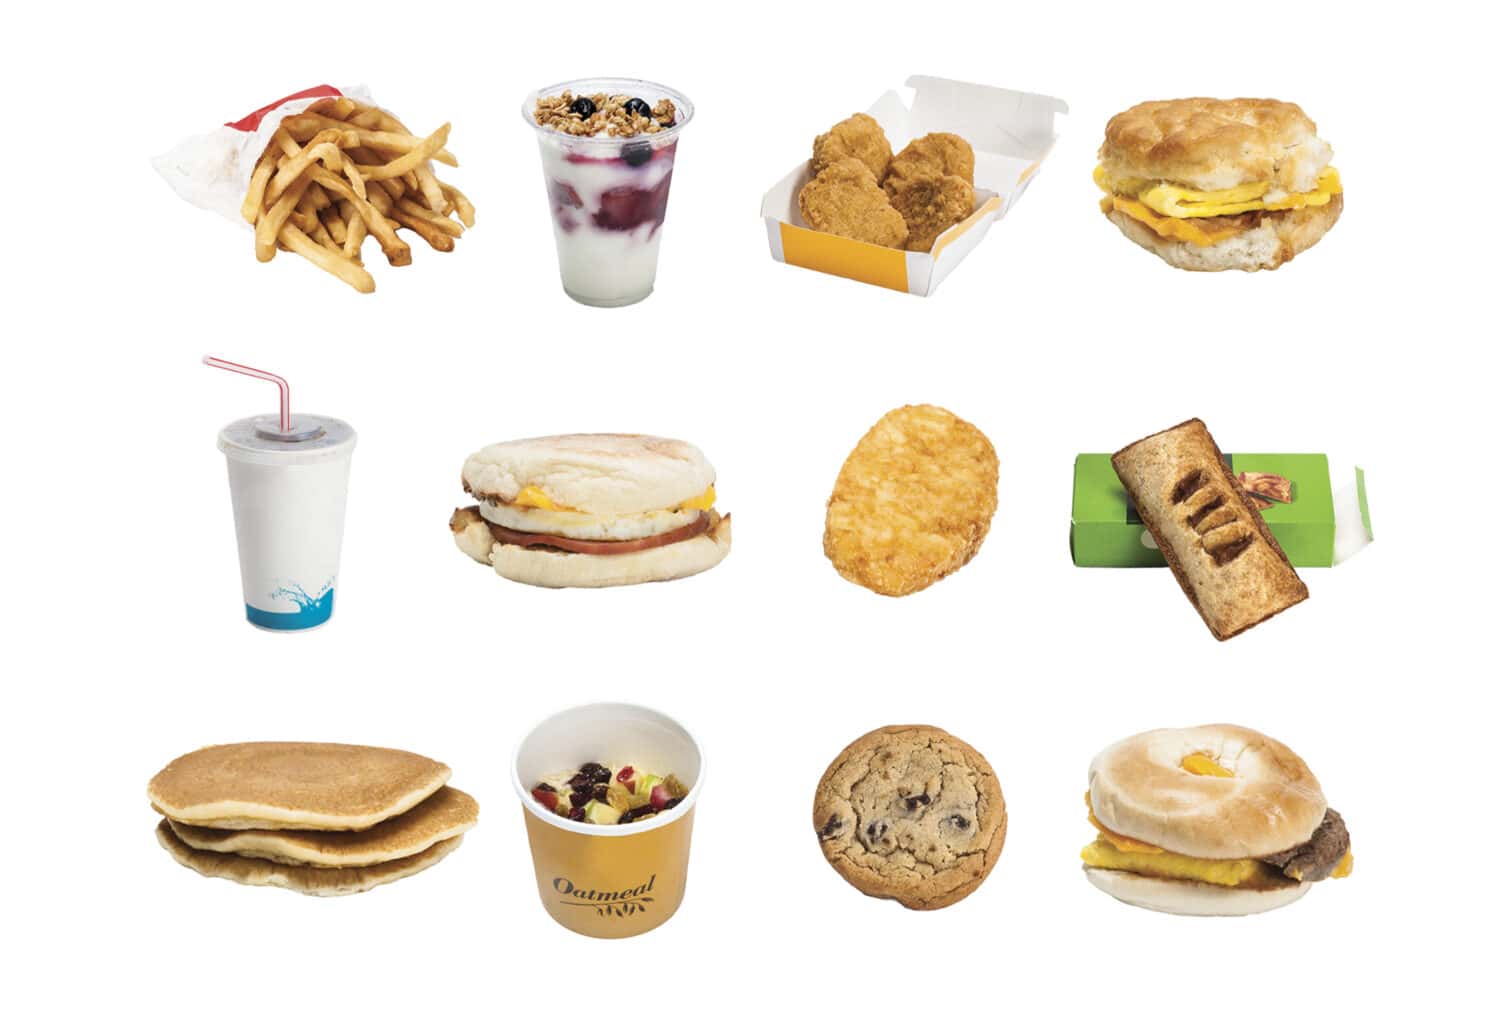 Fast Food - McDonald's $1 menu